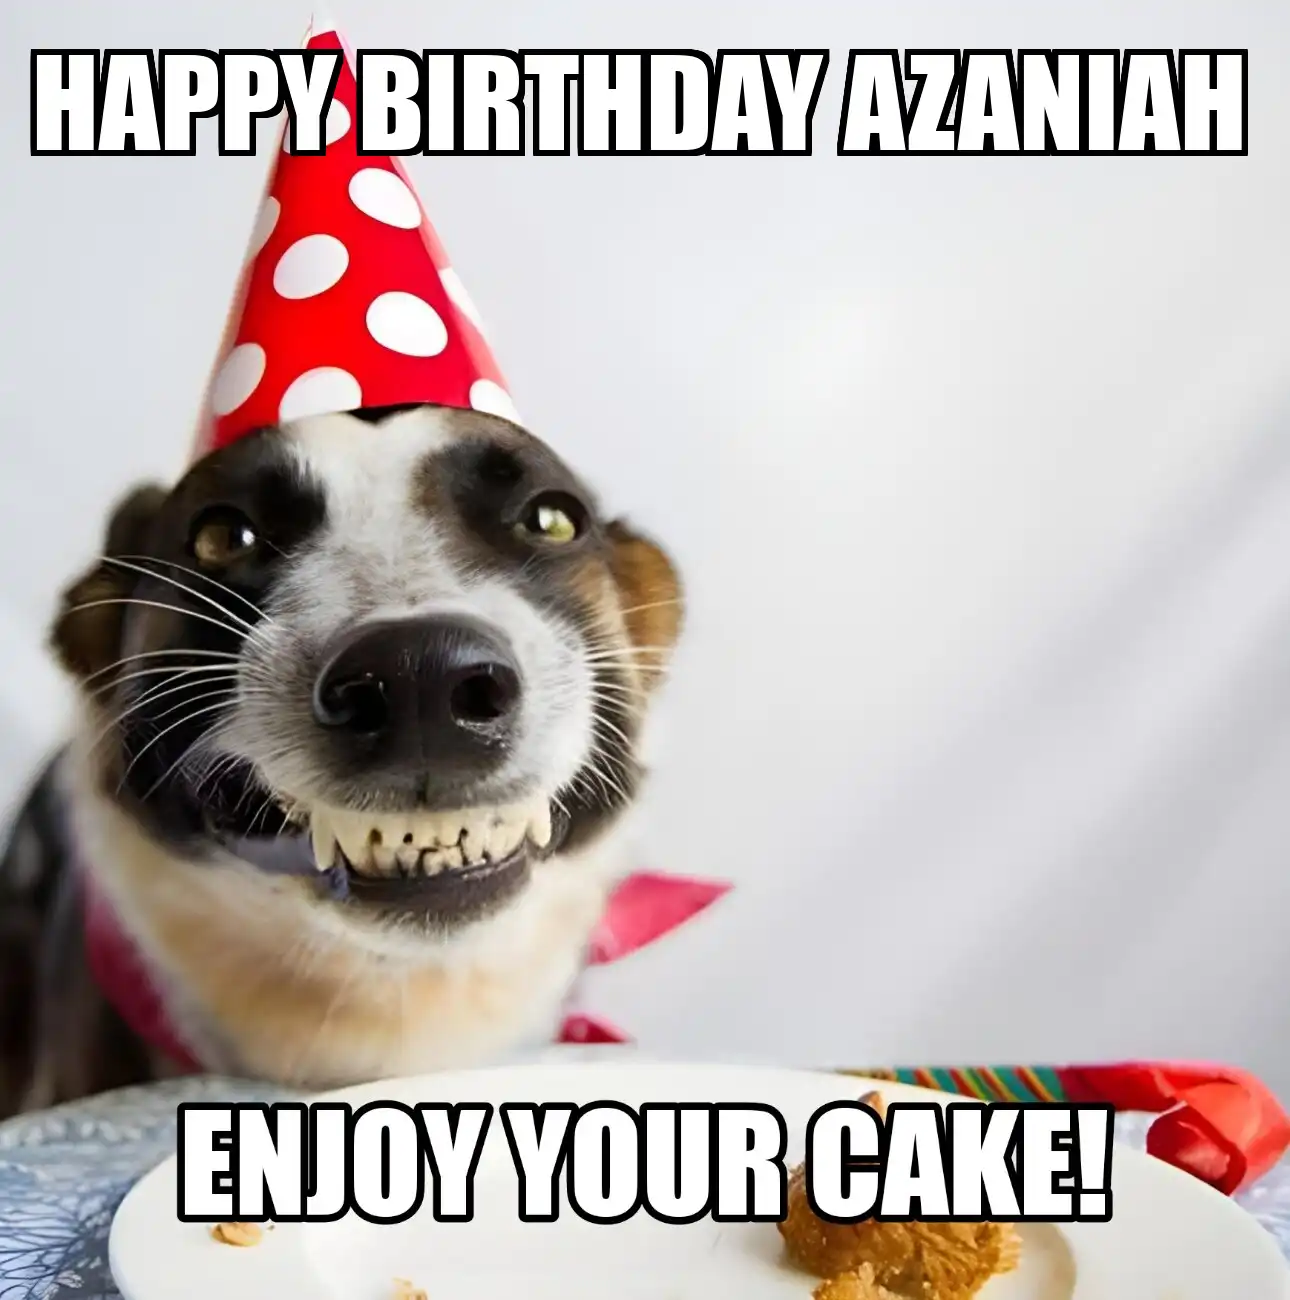 Happy Birthday Azaniah Enjoy Your Cake Dog Meme